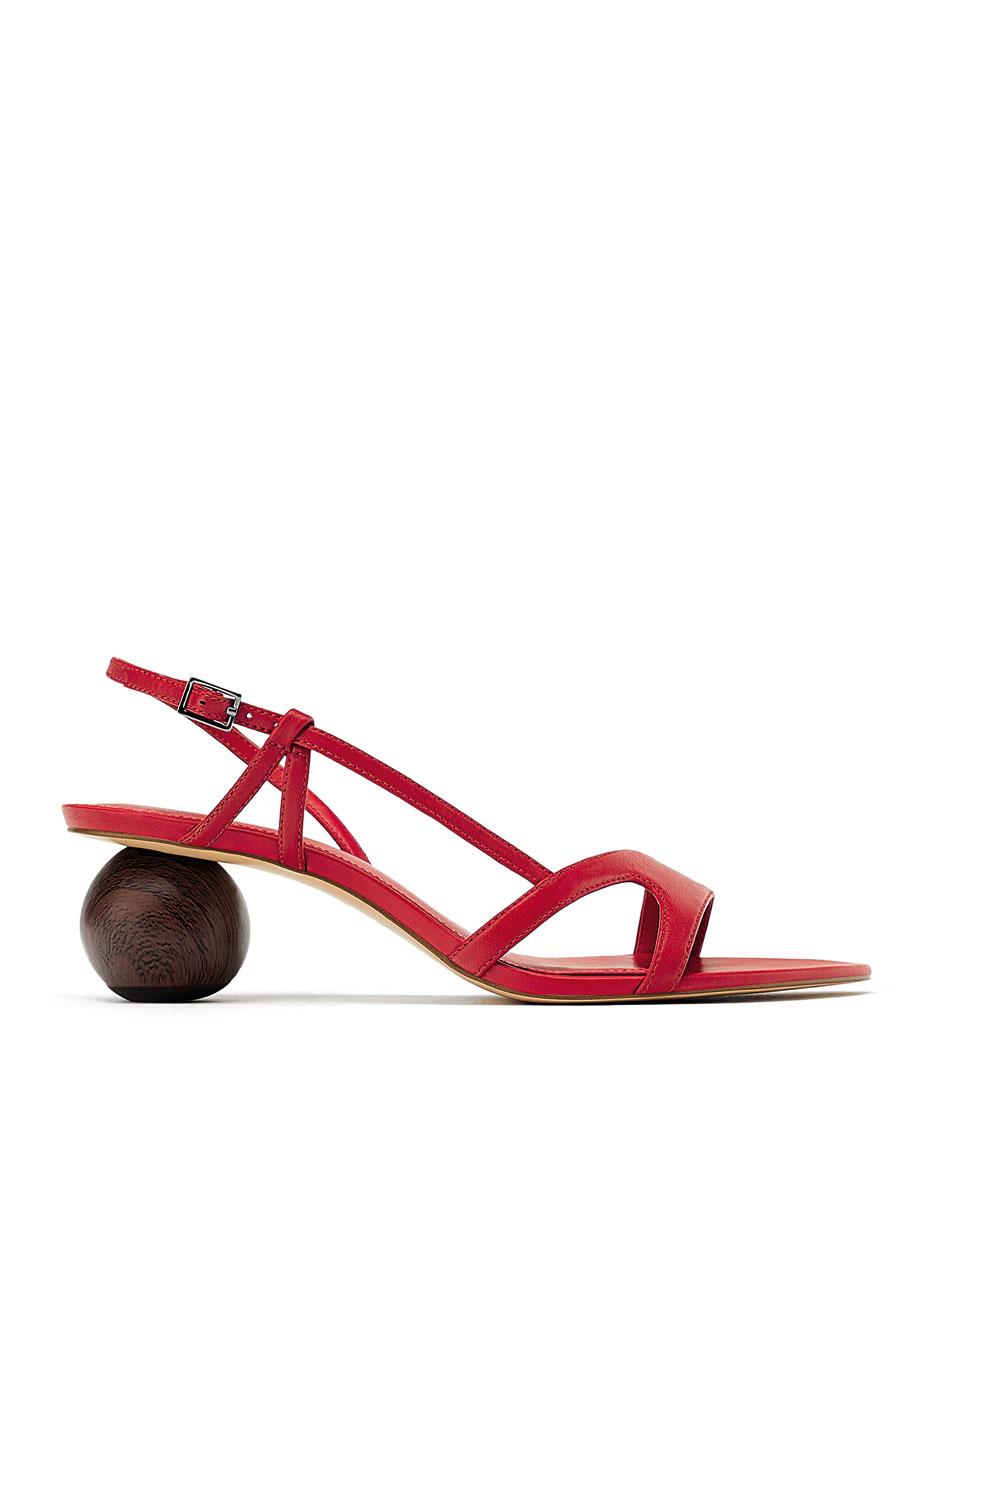 clones sandalias Zara, 29,95€